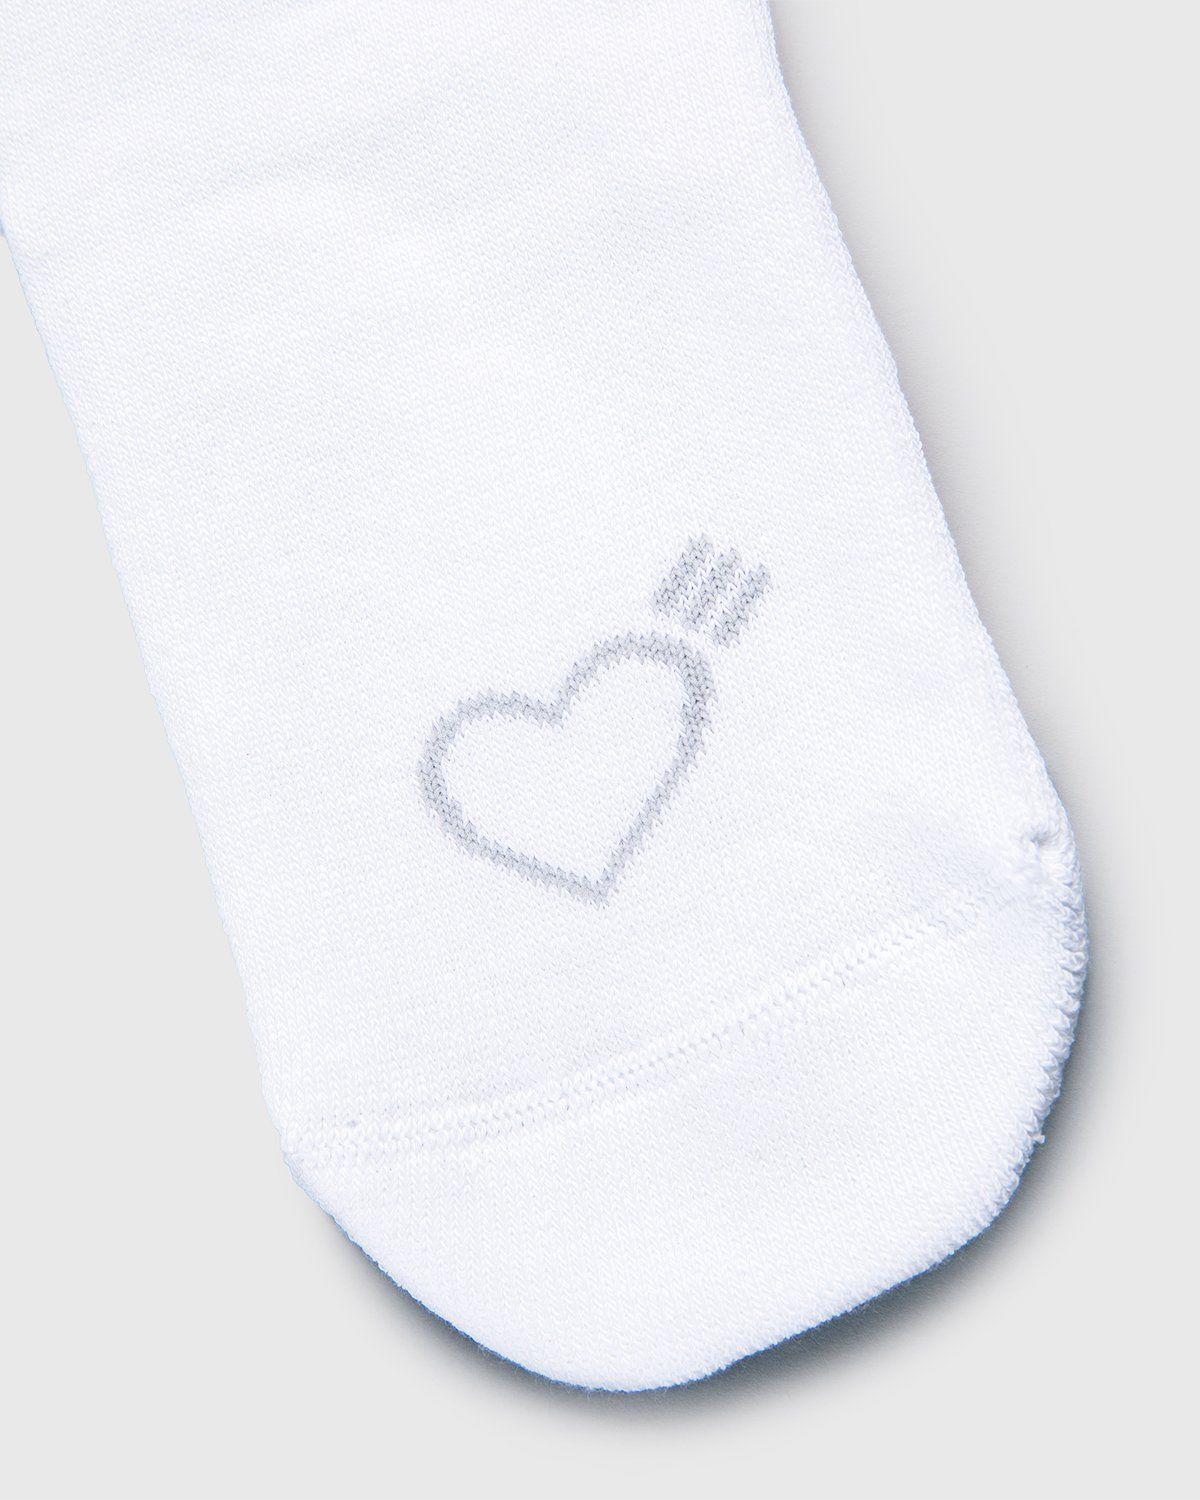 adidas Originals x Human Made – Socks White - Socks - White - Image 5